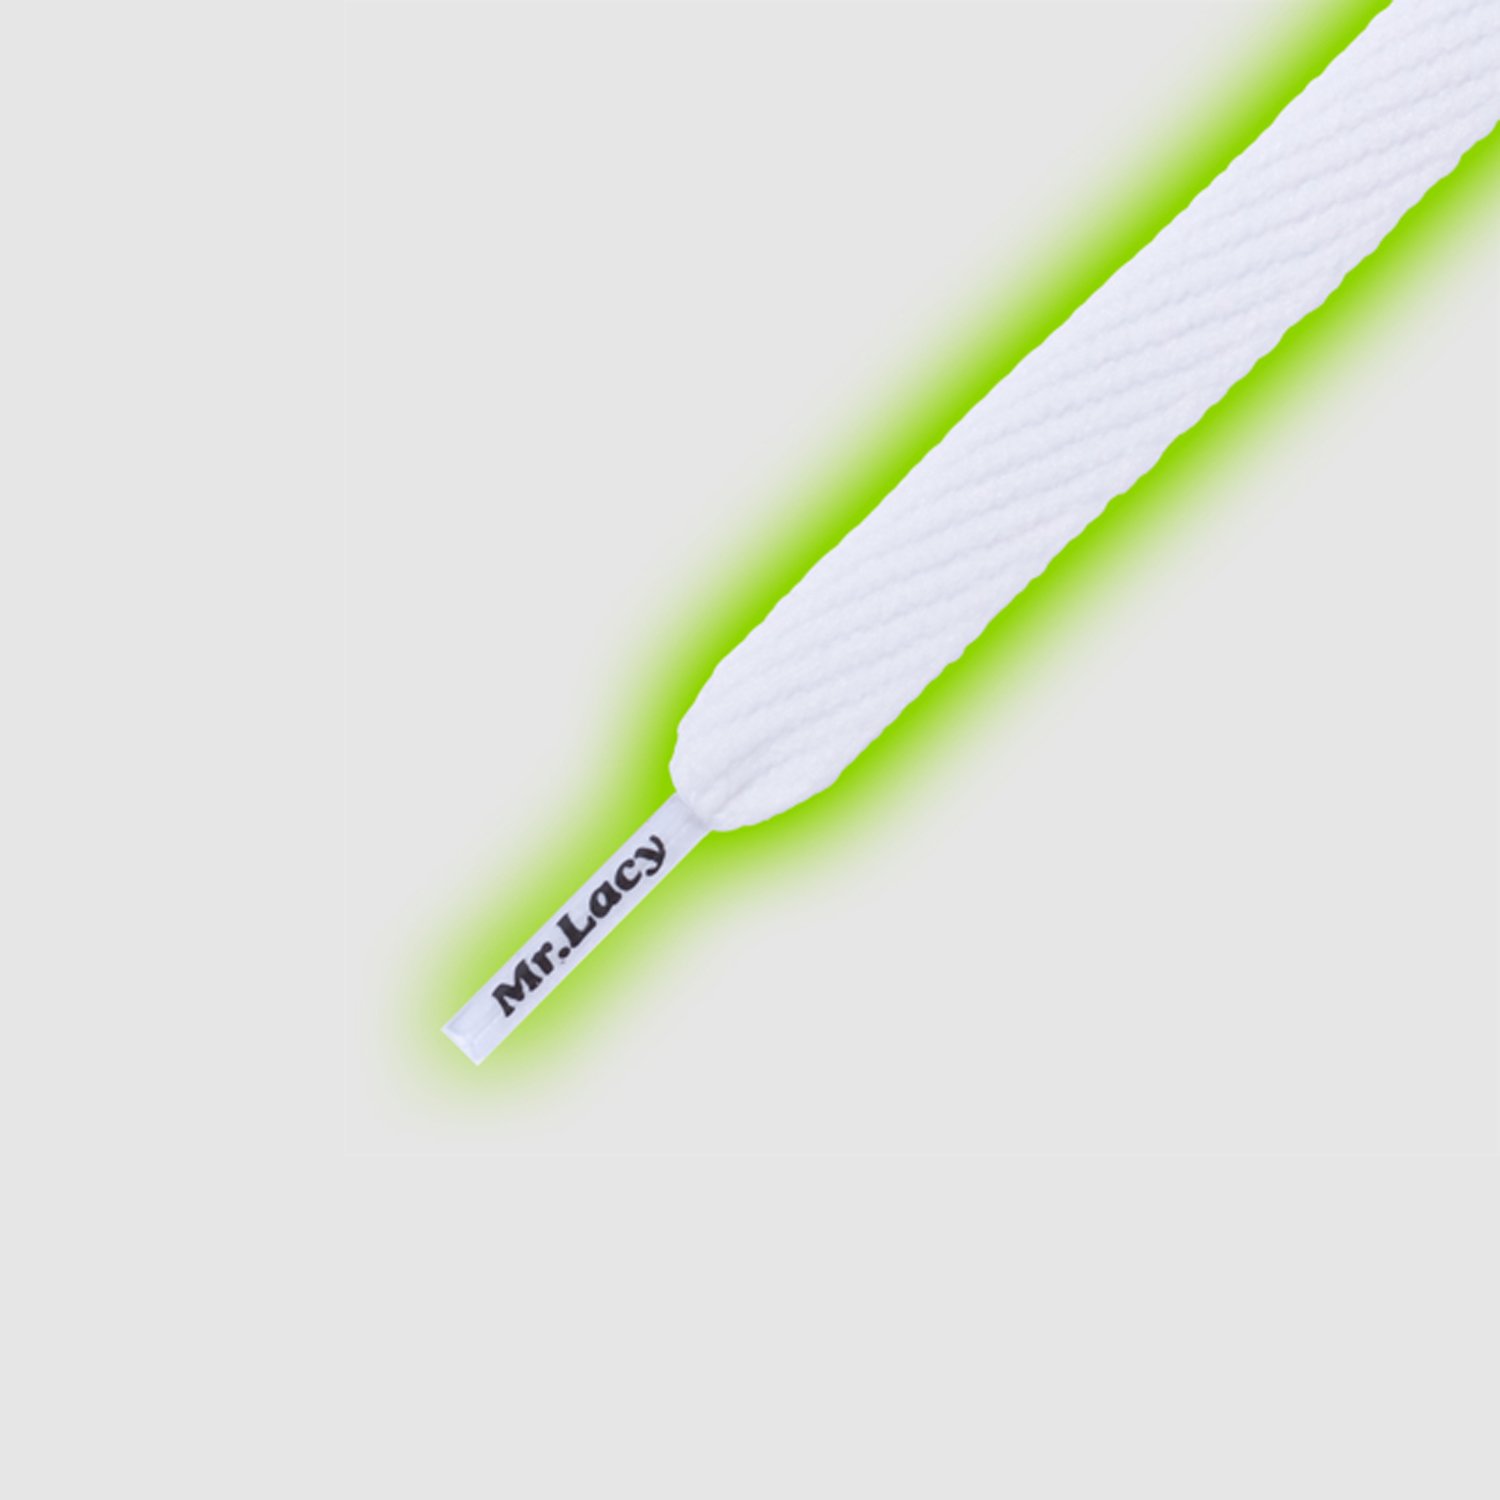 Flatties -JR- Glow In the dark- זוג שרוכים זוהרים בלילה בצבע ירוק 110 ס